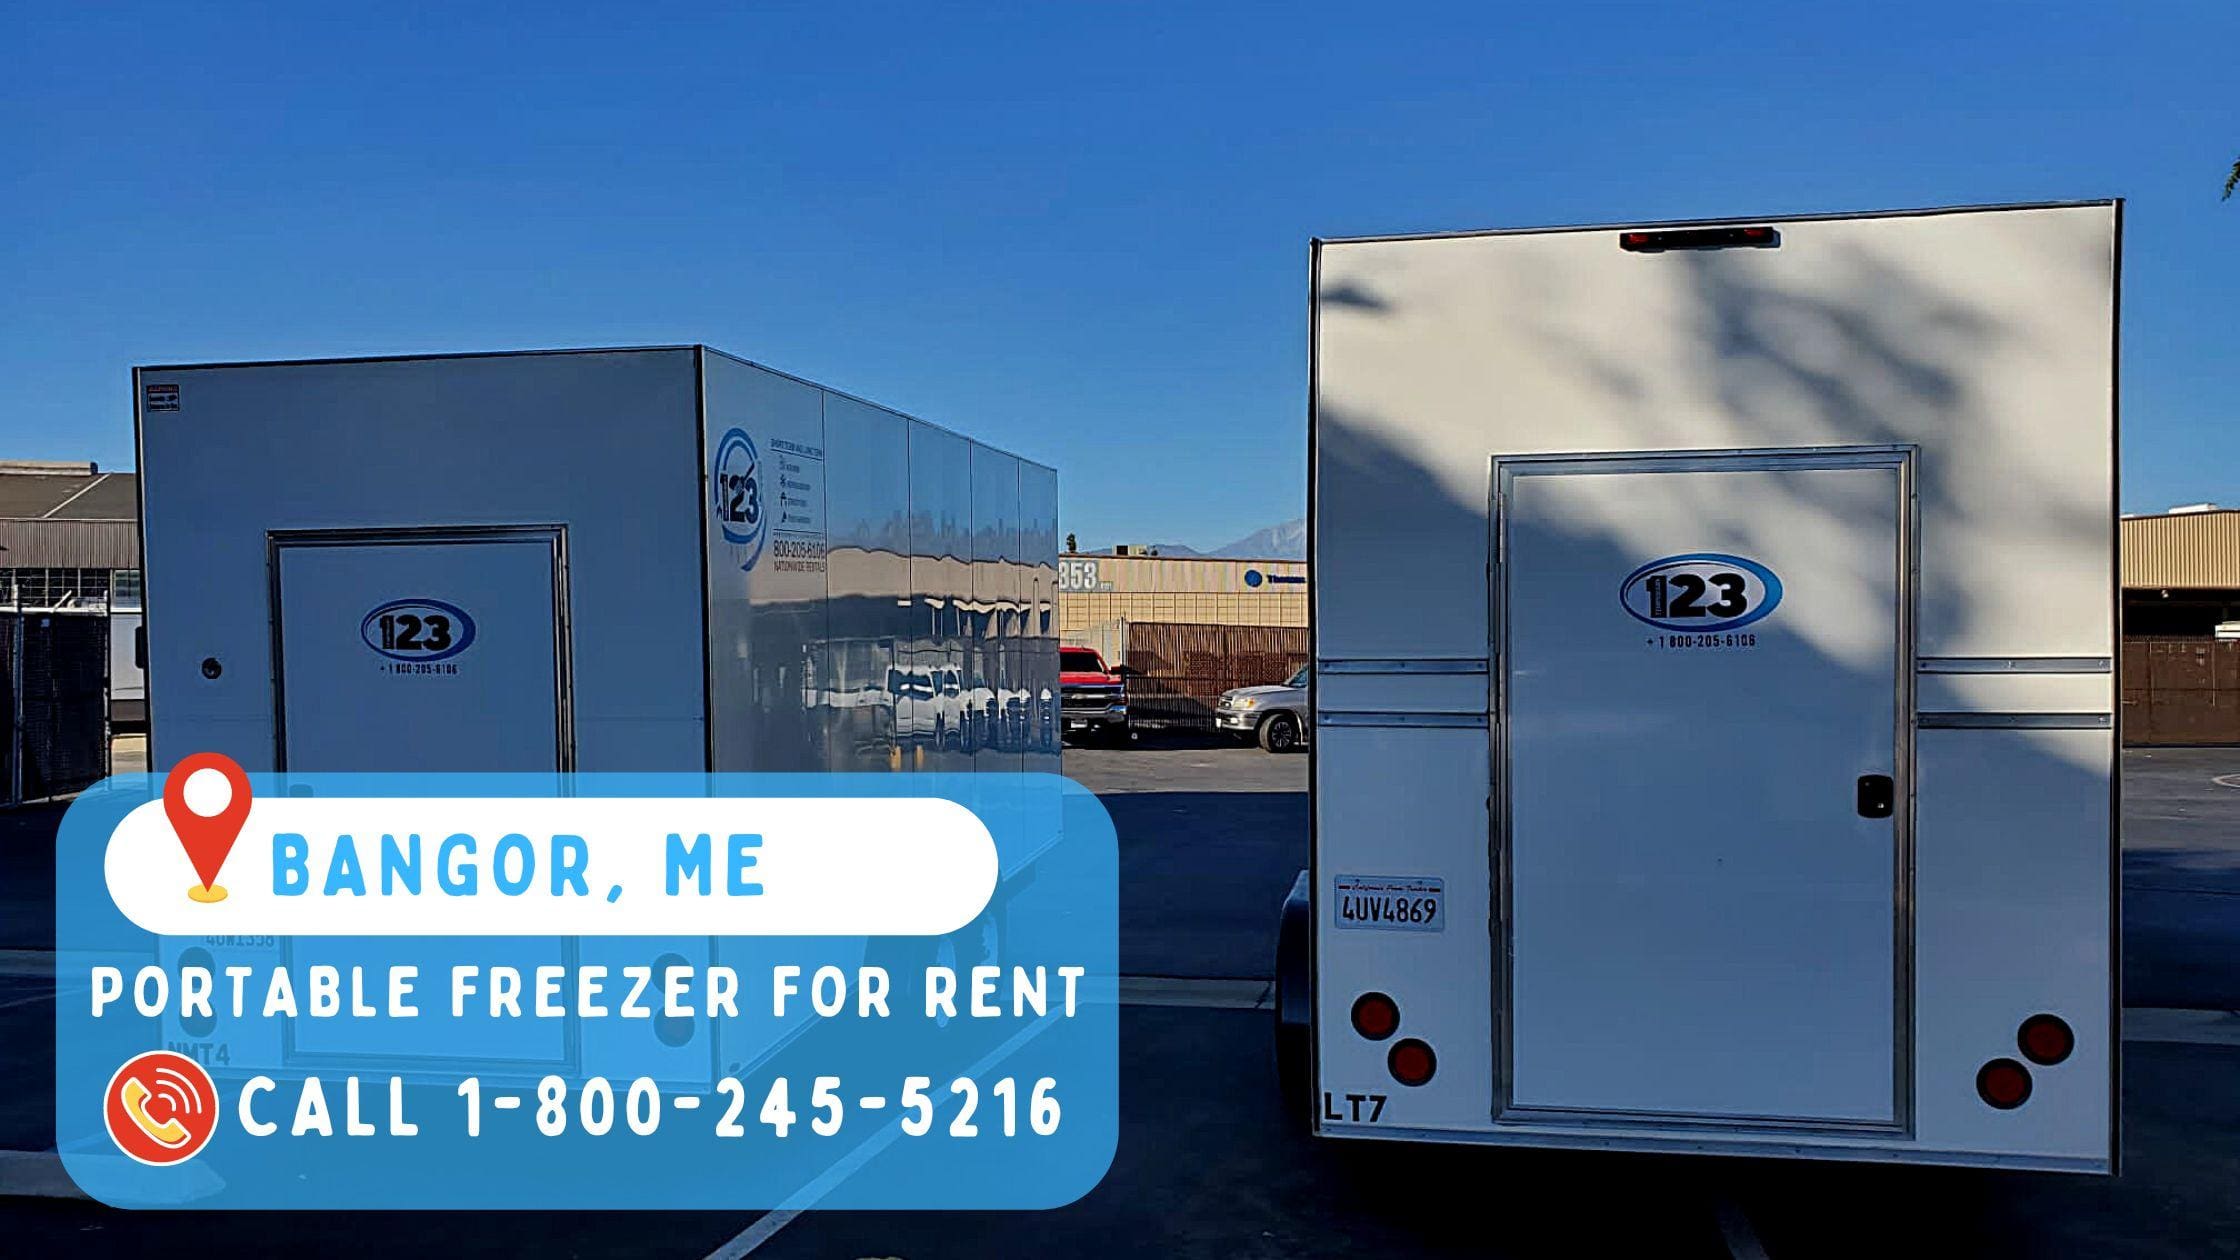 Portable freezer for rent in Bangor, ME